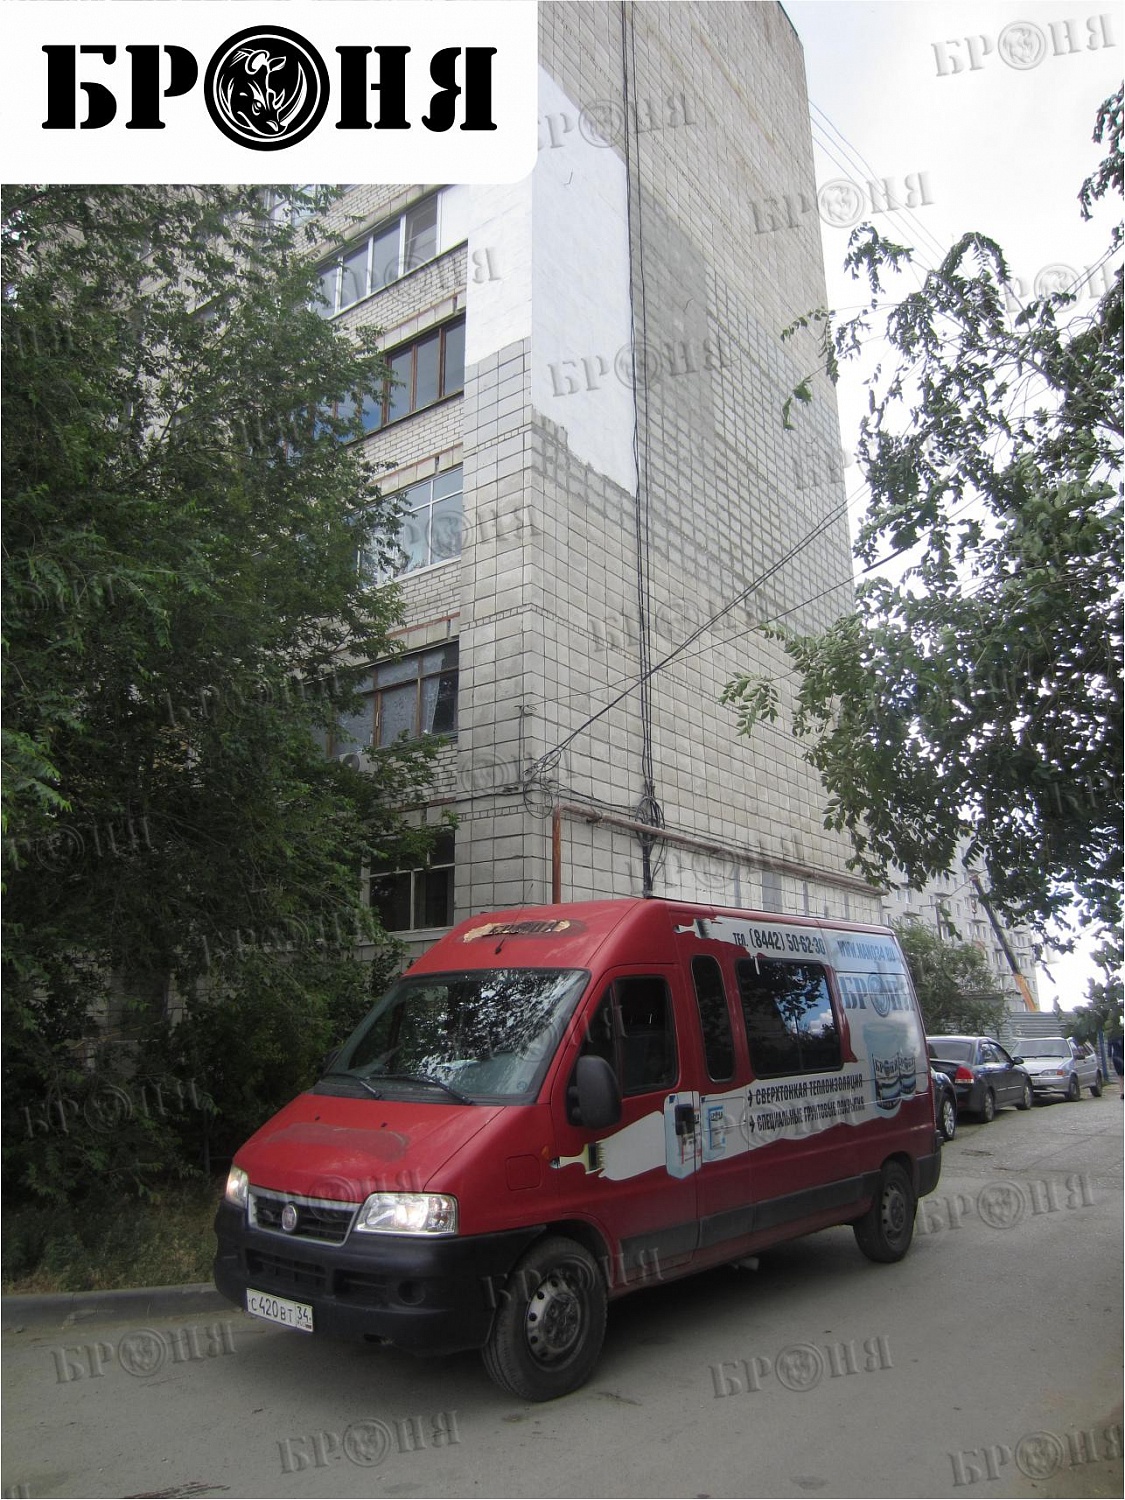 Волгоград, Броня Стена на фасаде девятиэтажного жилого дома